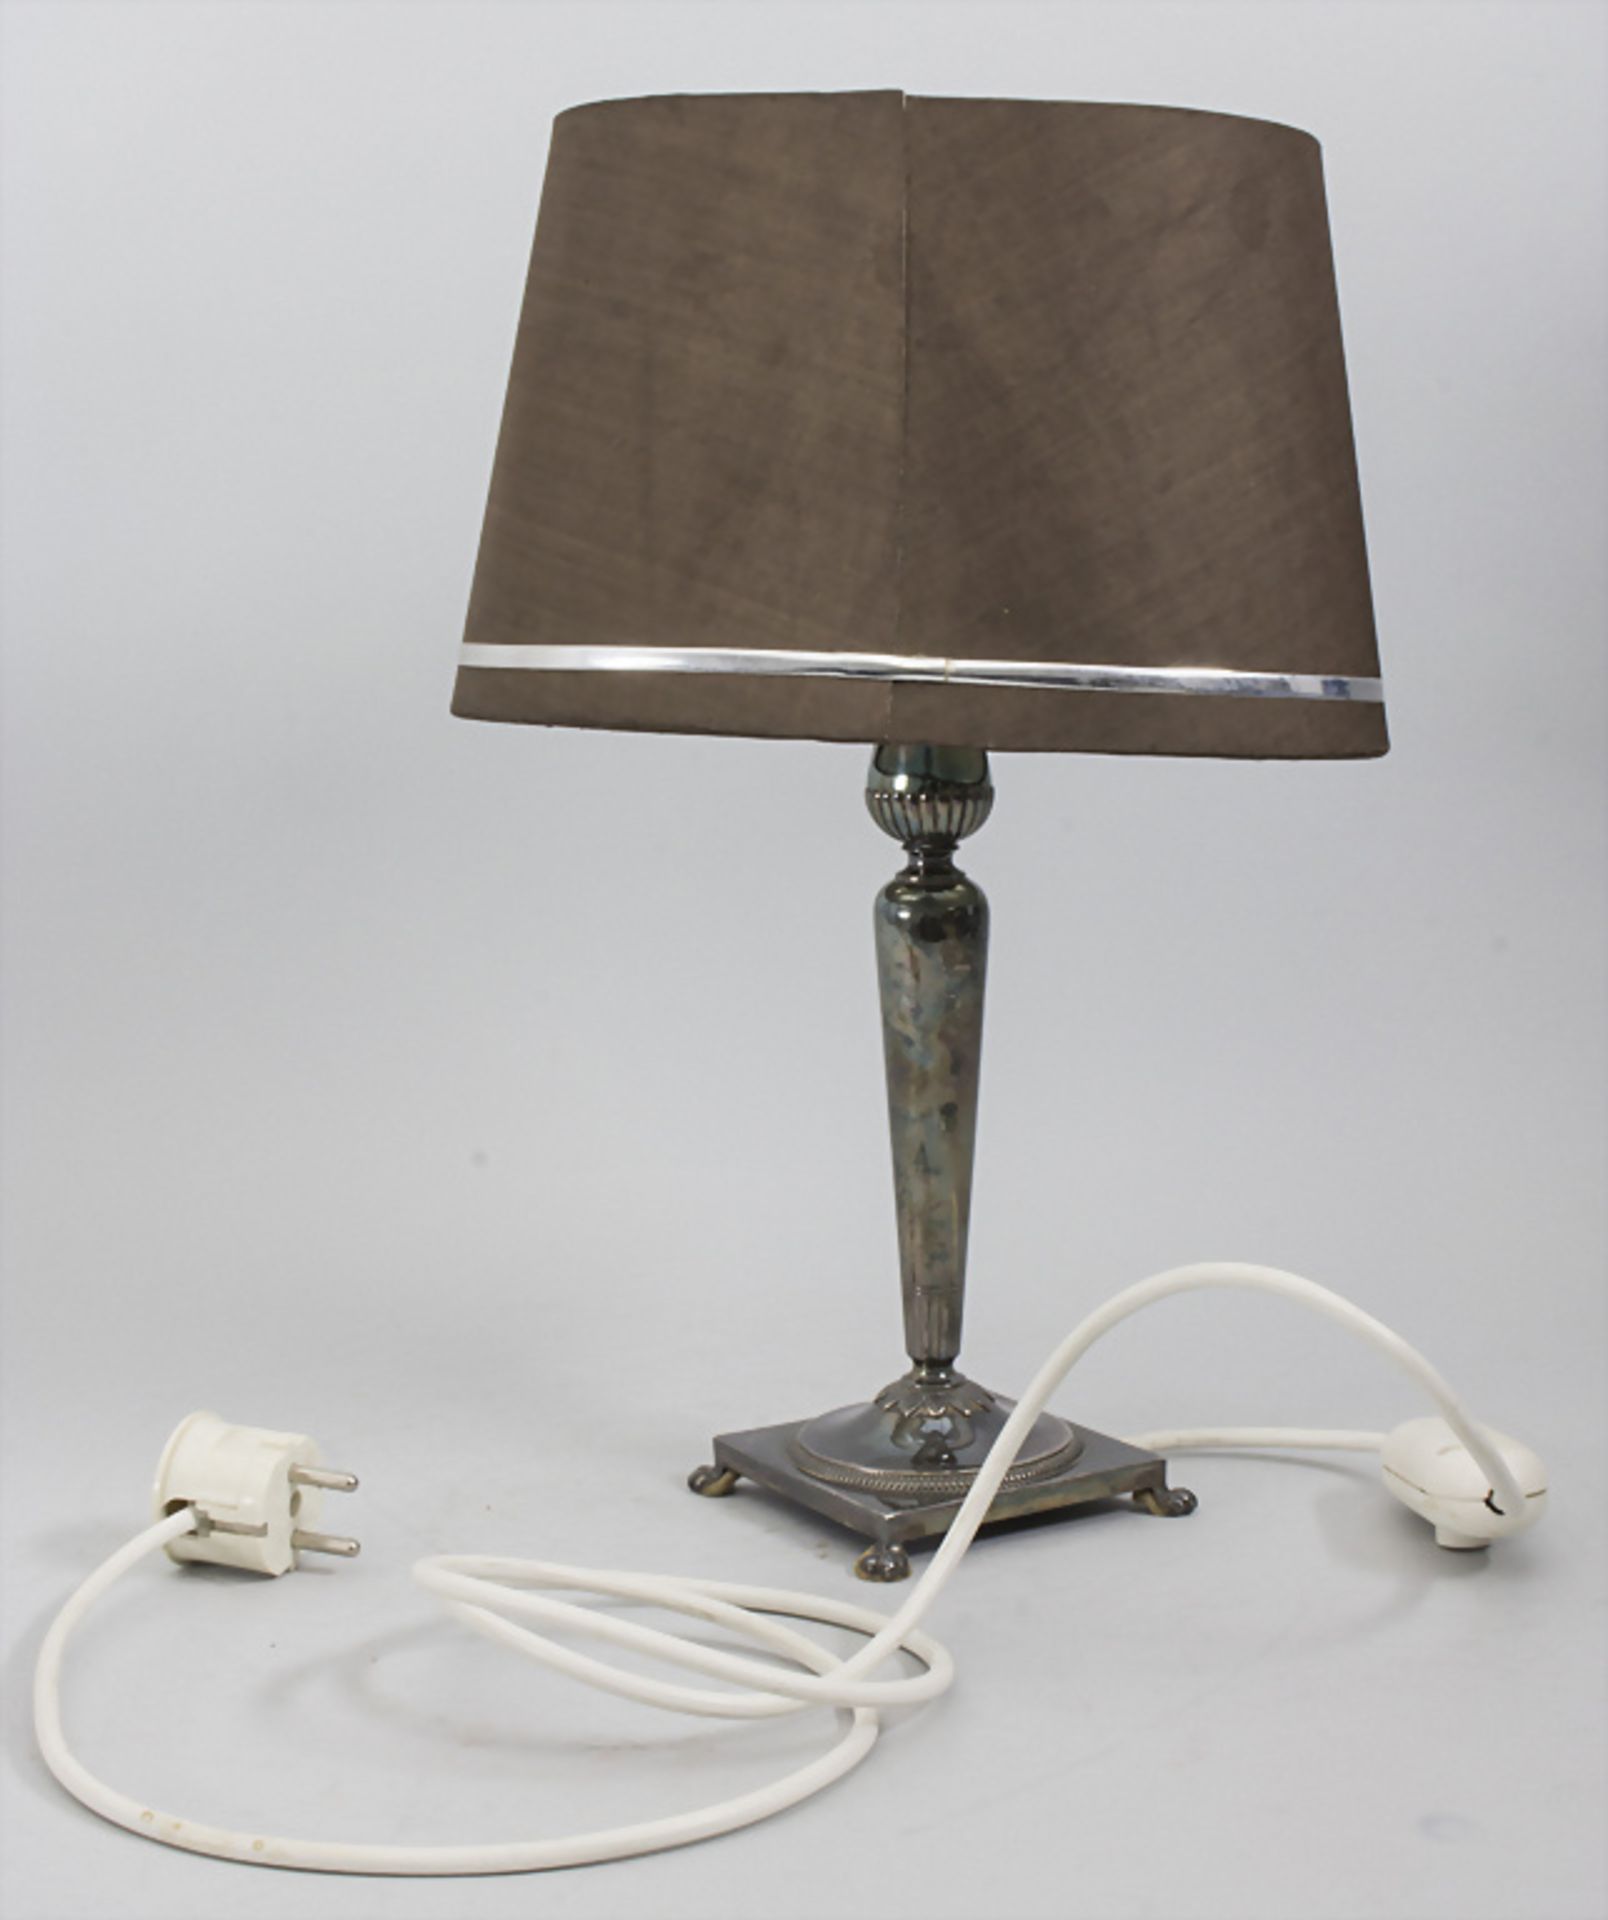 Tischlampe mit Silberfuß / A table lamp with Sterling silver foot, Jan Dix, Deutschland, 20. Jh.